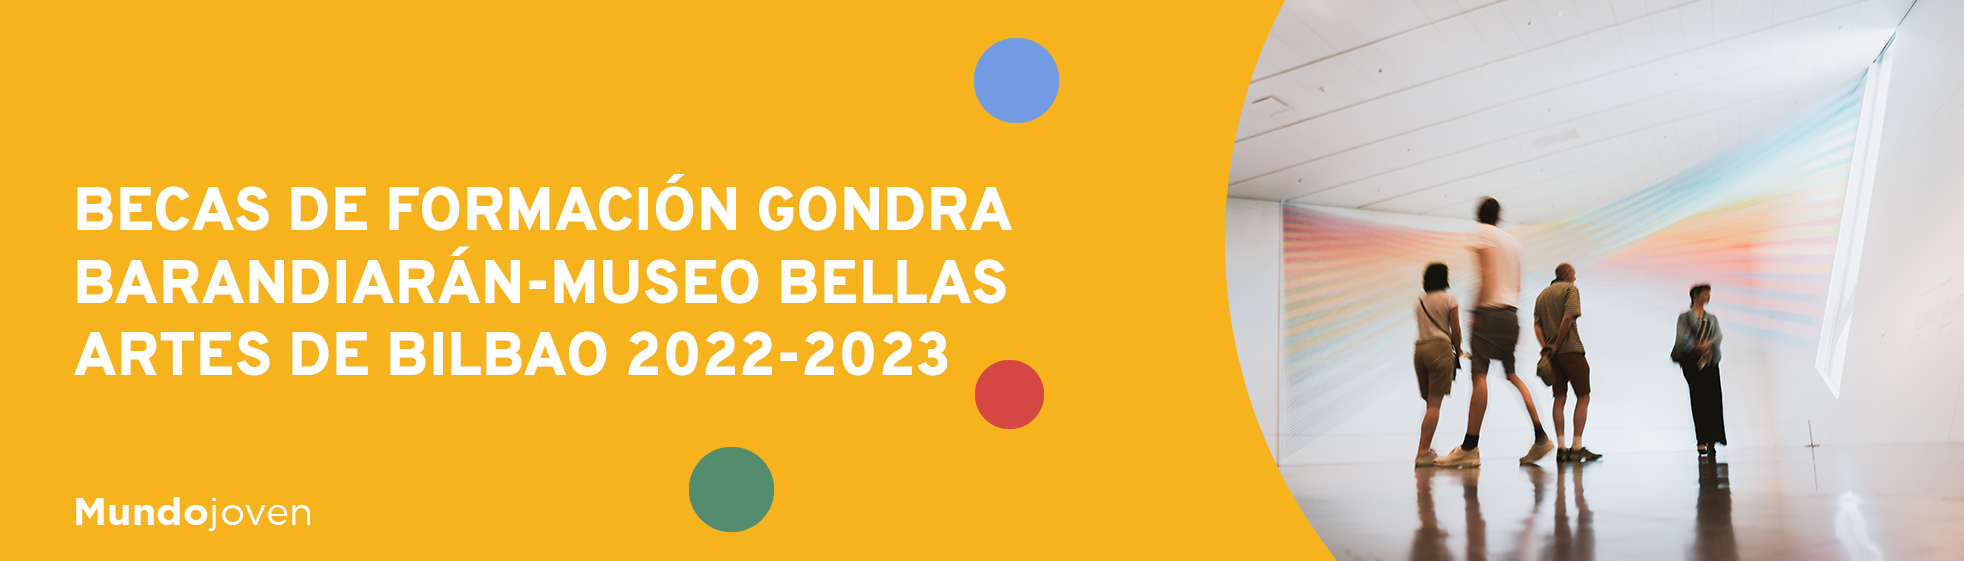 Becas de formación Gondra Barandiarán-Museo Bellas Artes de Bilbao 2022-2023